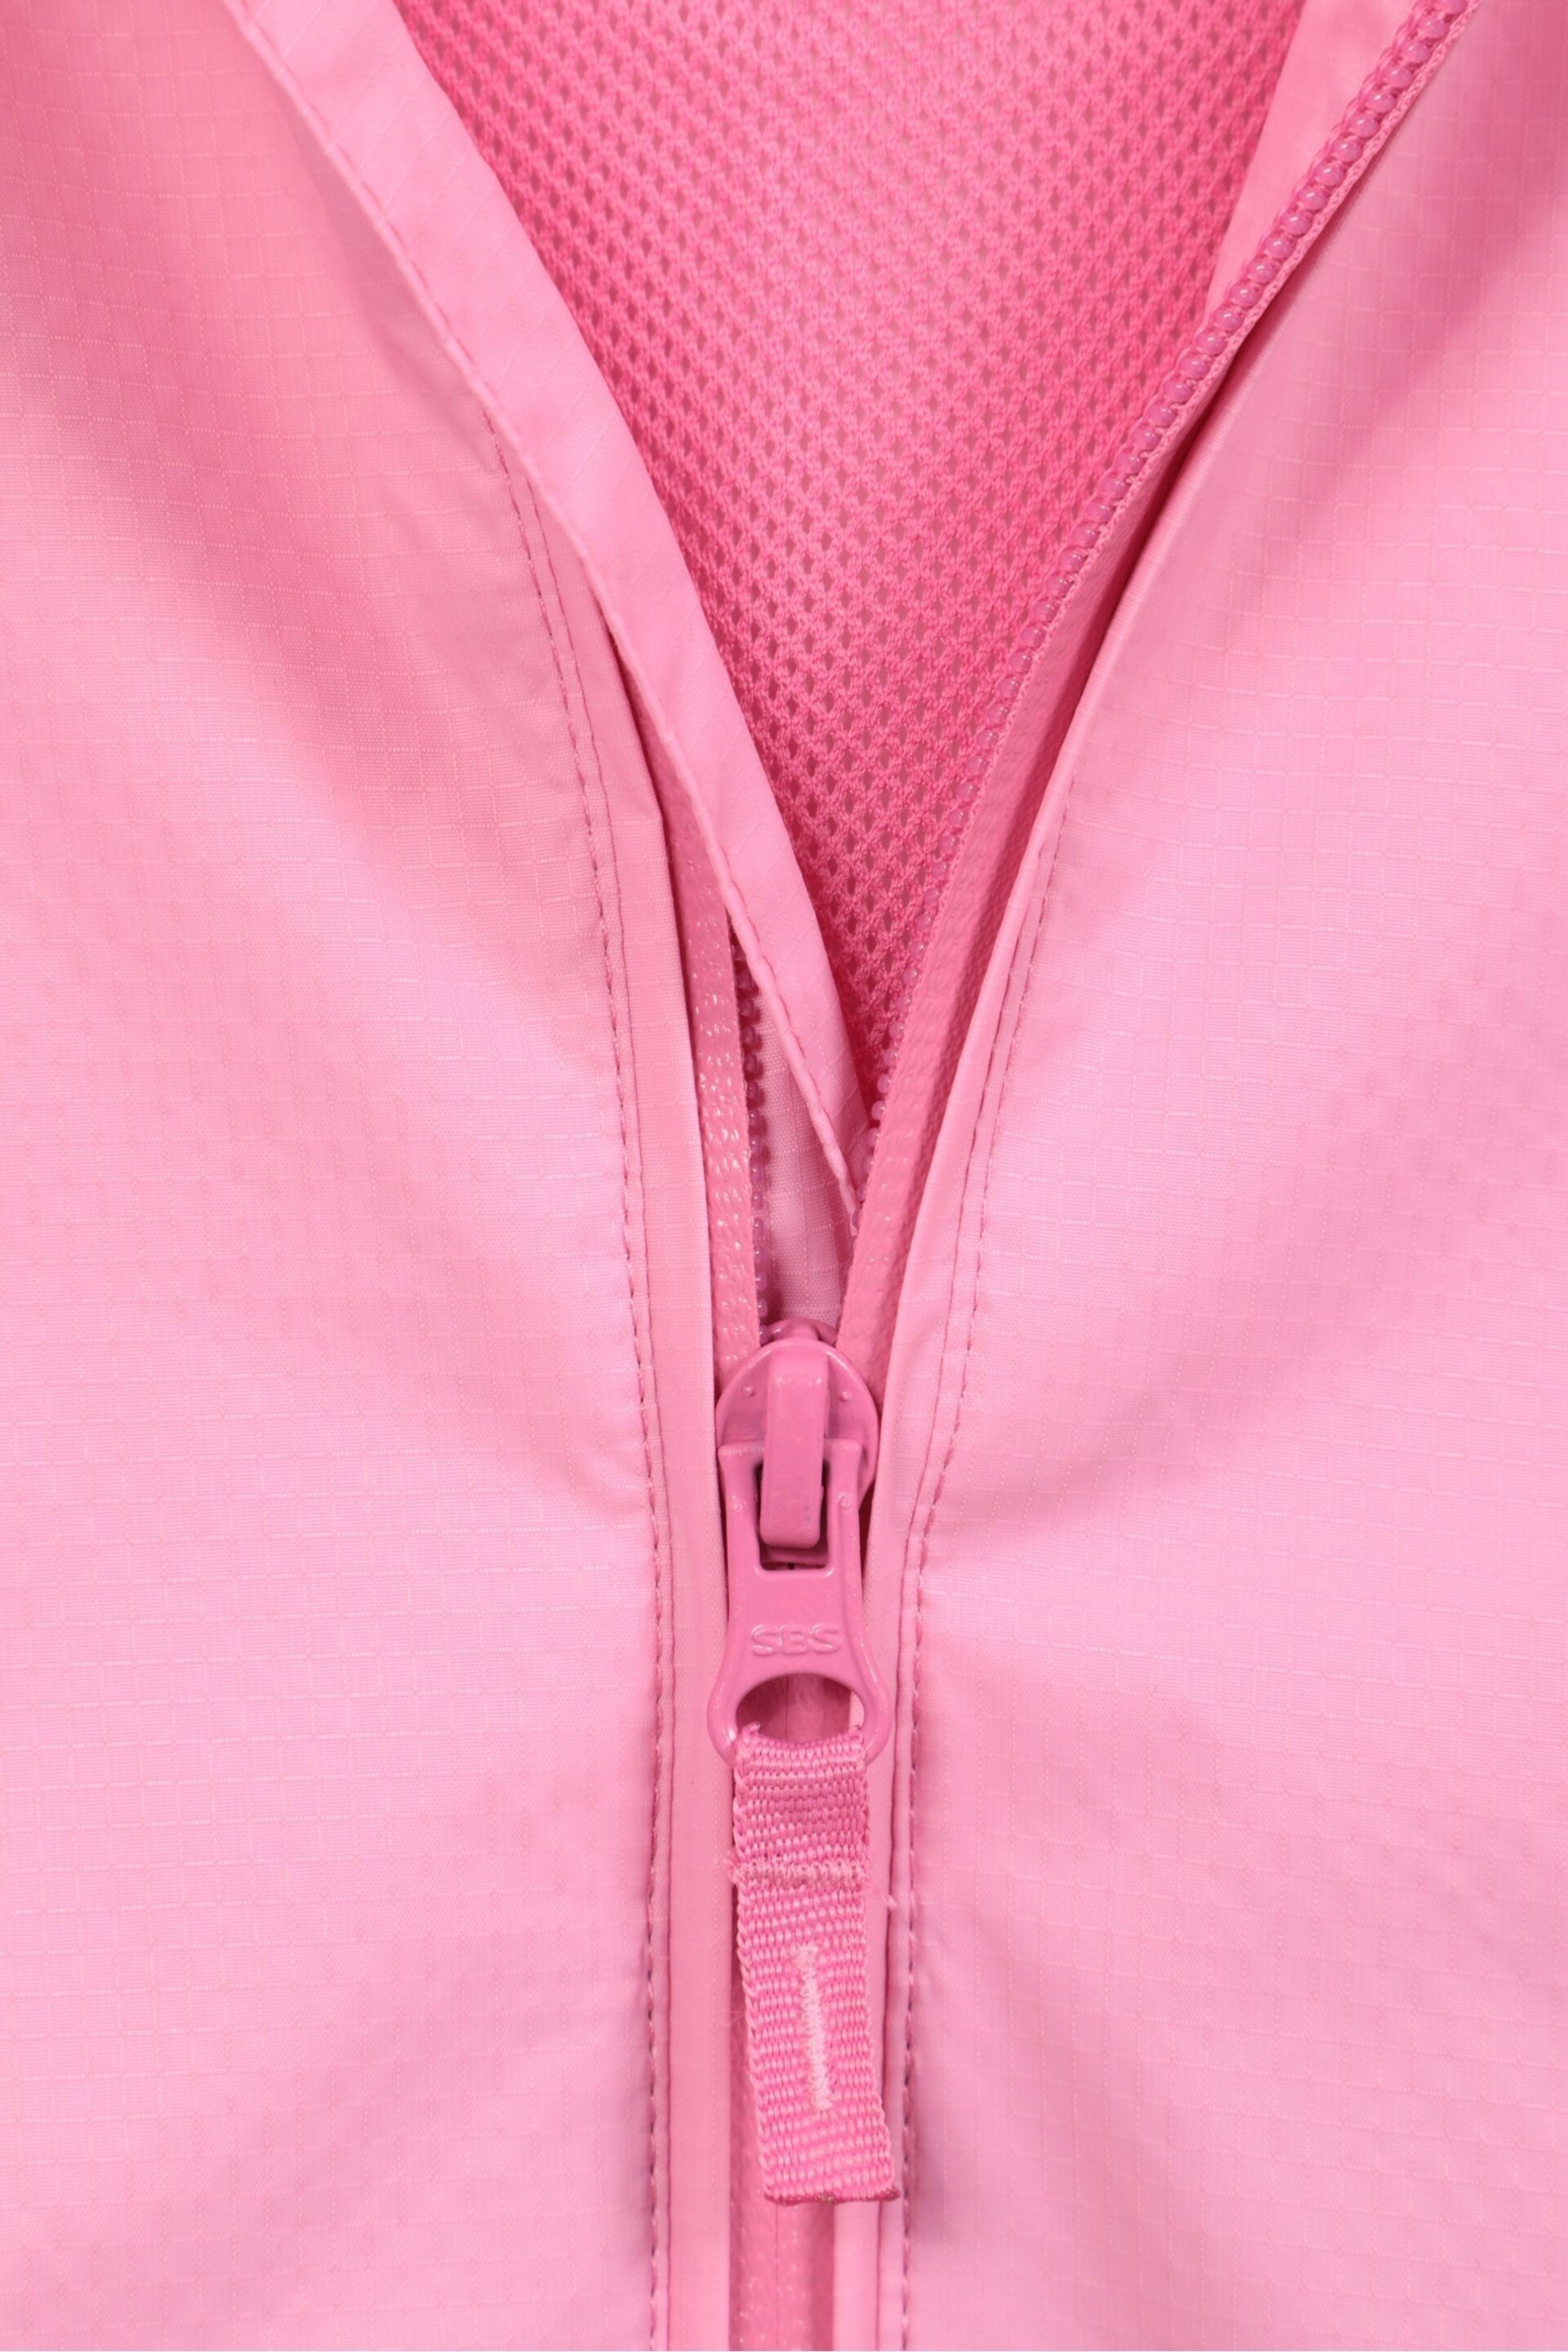 Mountain Warehouse Pink Kids Torrent Waterproof Jacket - Image 5 of 5